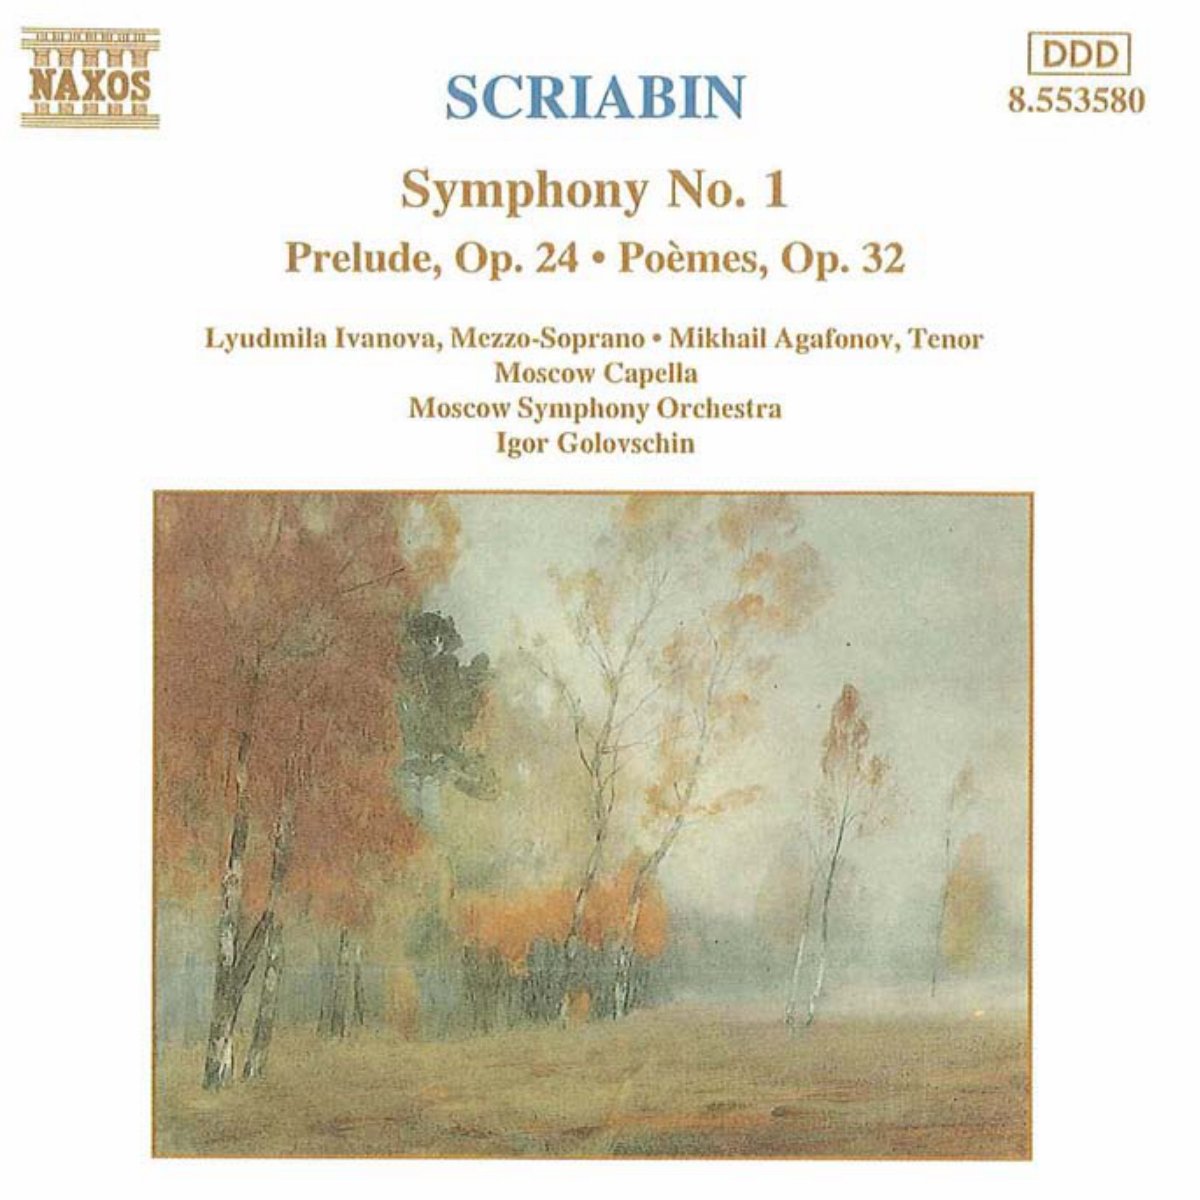 SCRIABIN: Symphony no. 1